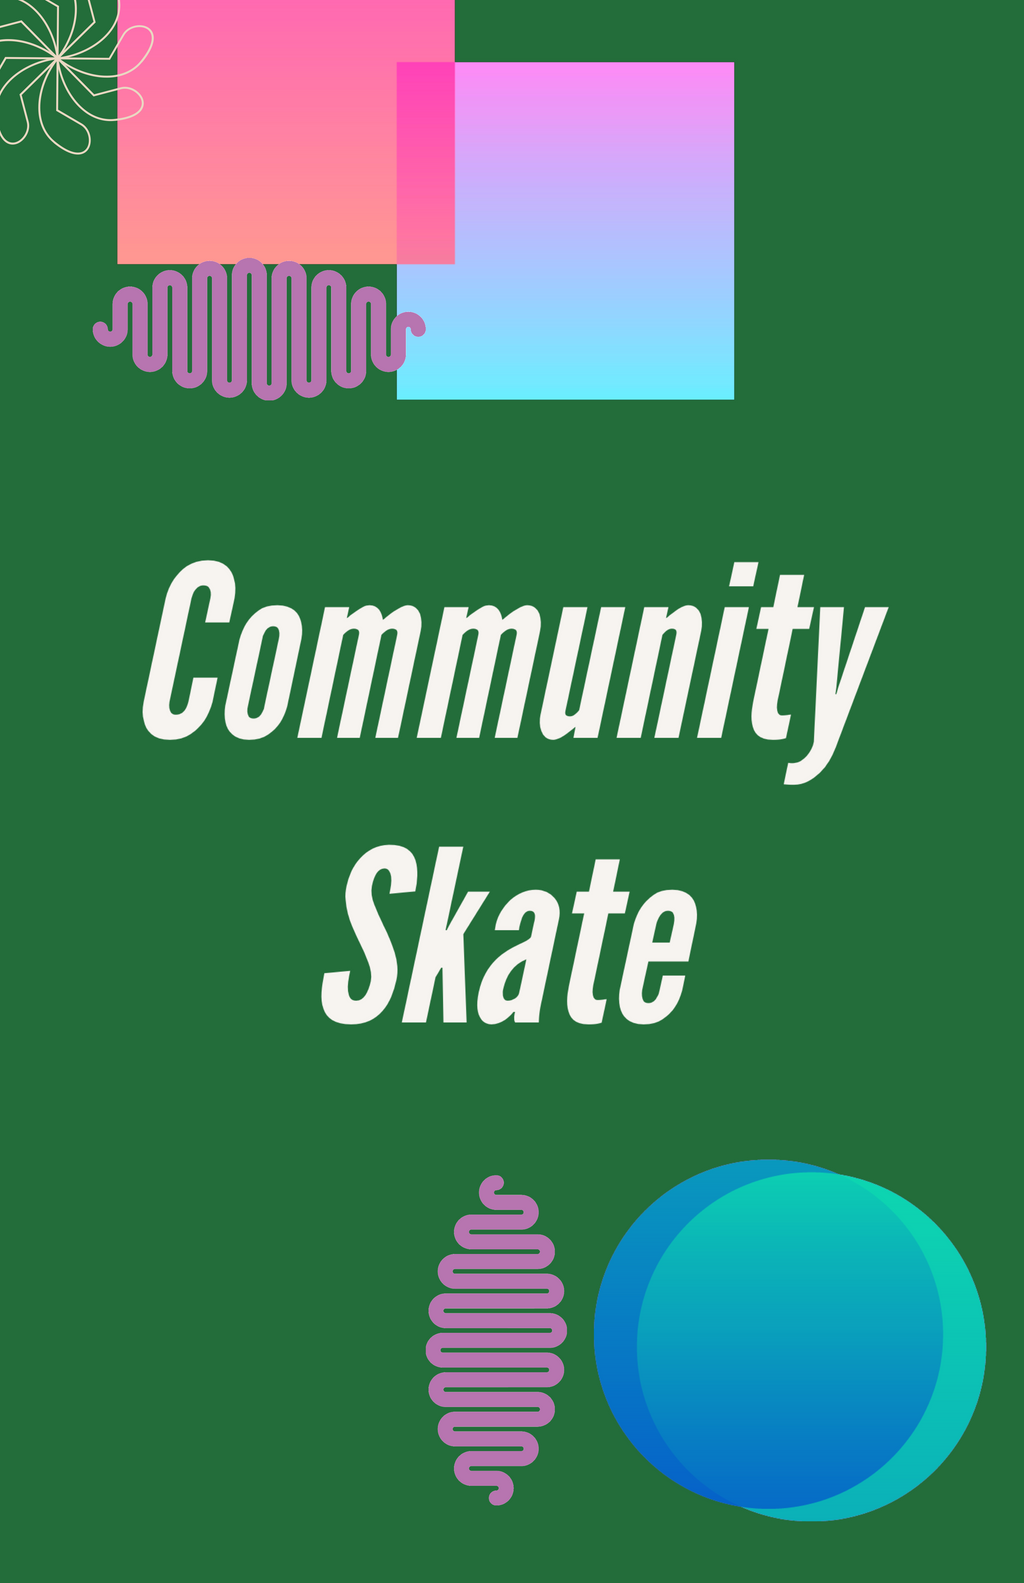 Community Skate